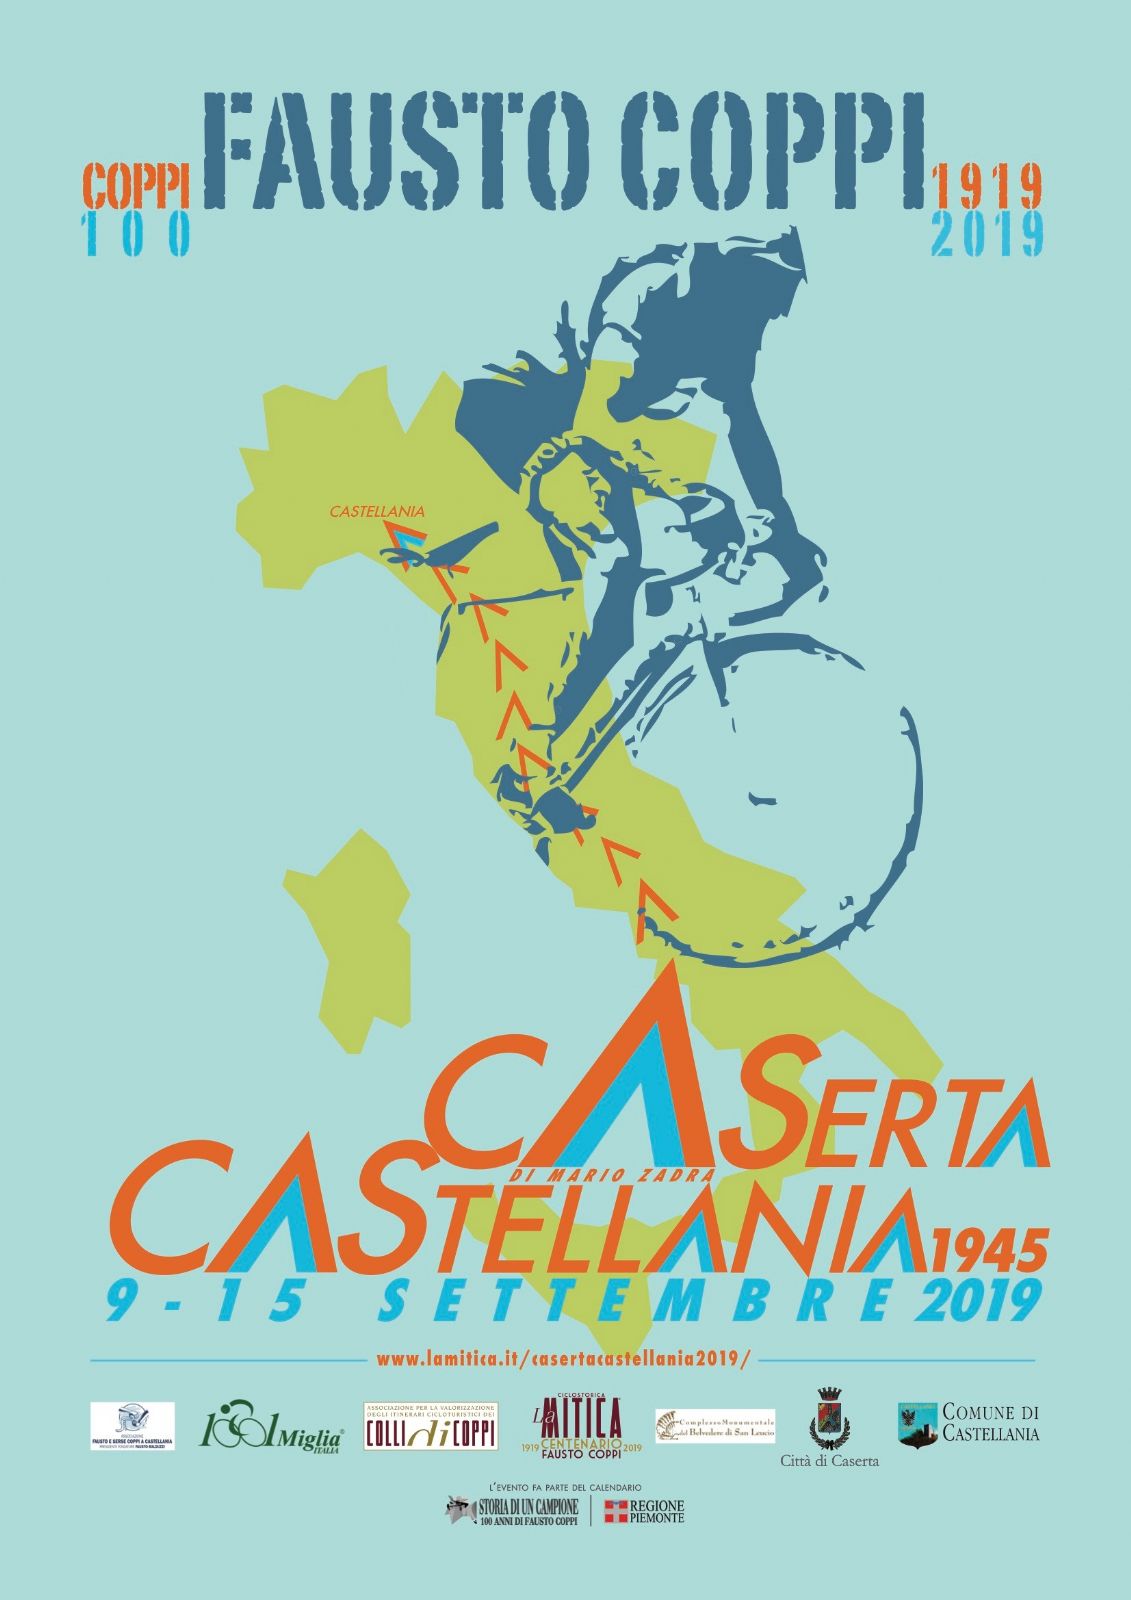 Castellania 2019: lunedì 9 e martedì 10 settembre gli appuntamenti a Caserta